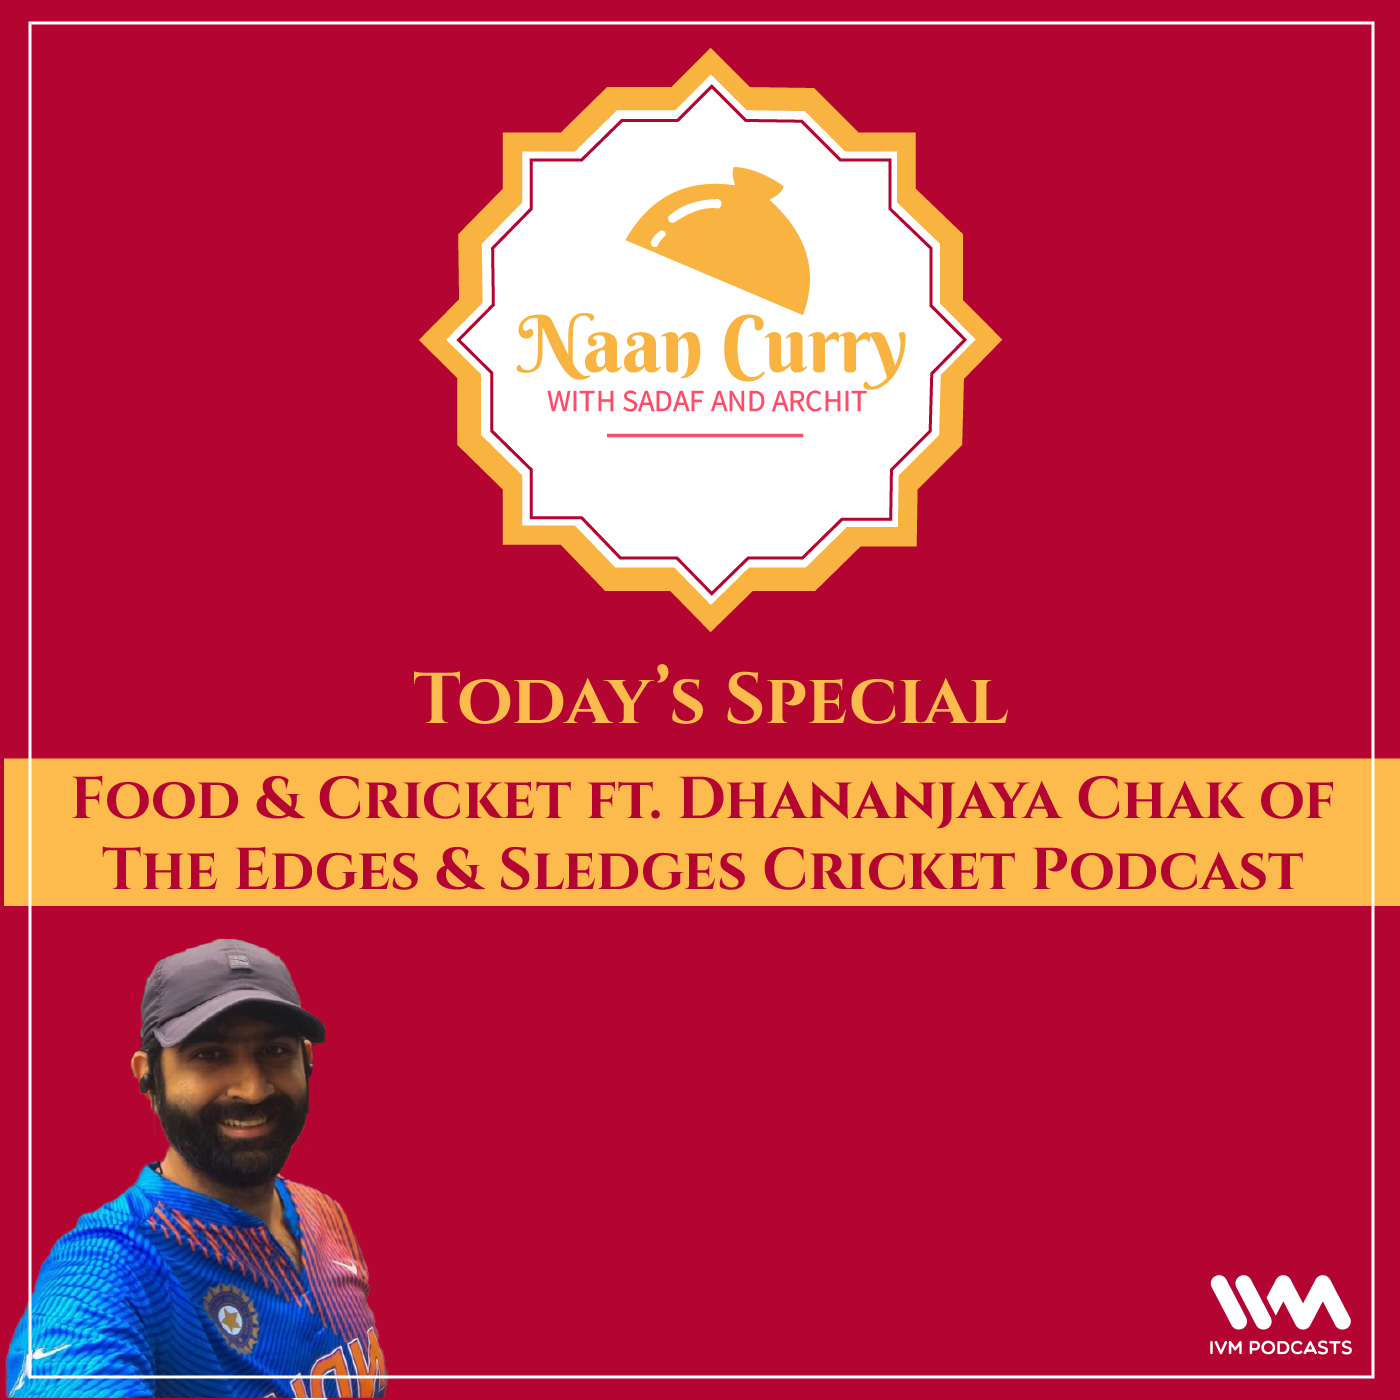 Food & Cricket ft. Dhananjaya Chak of The Edges & Sledges Cricket Podcast